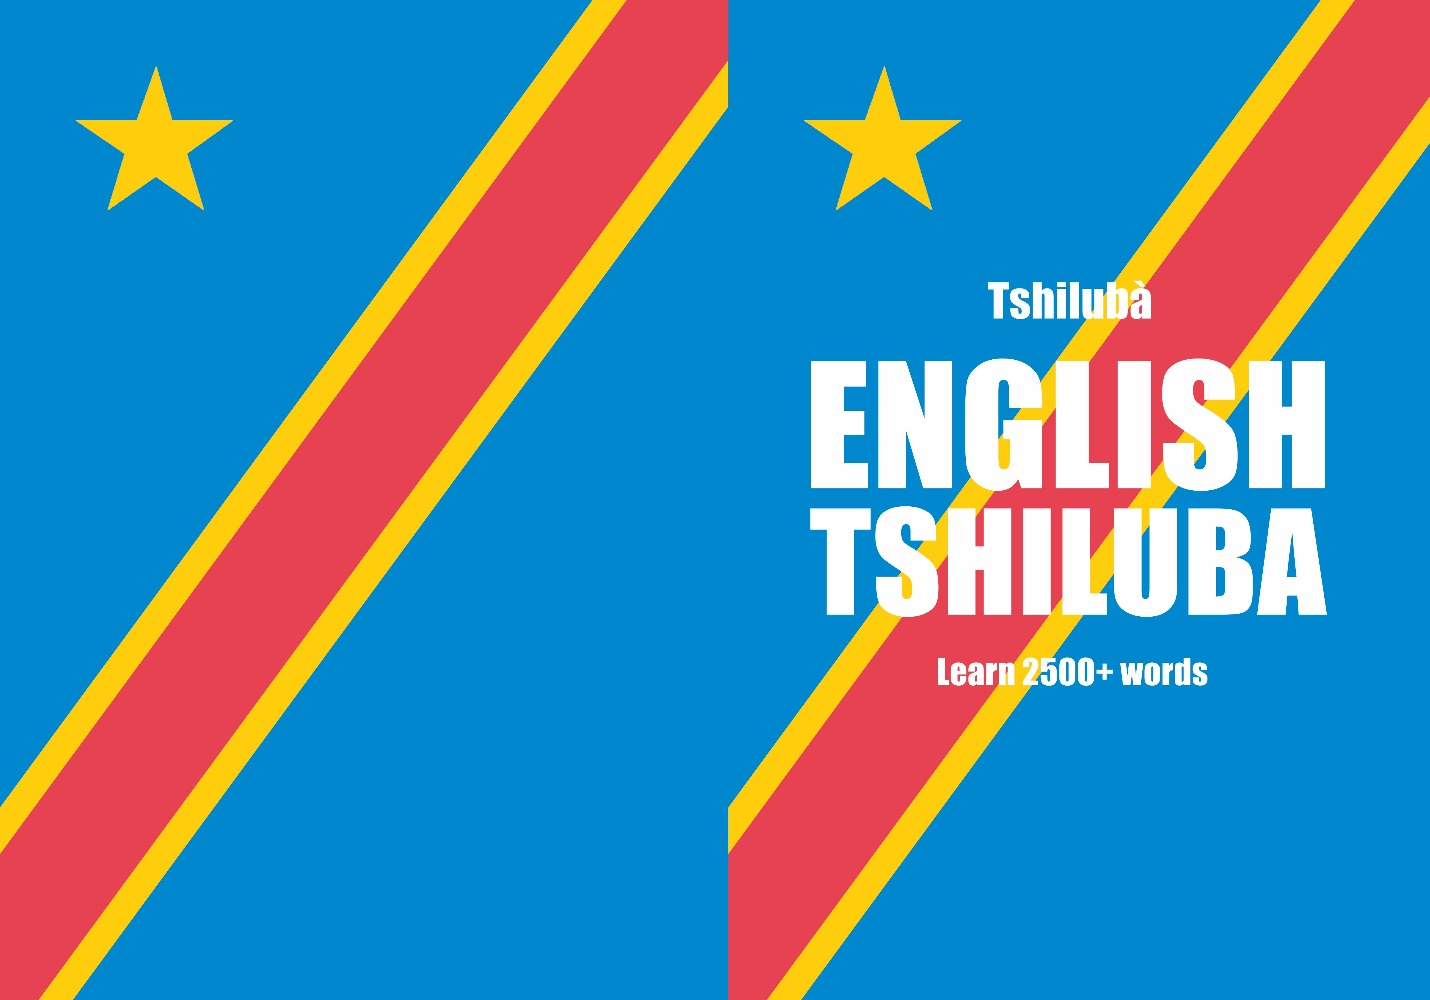 Tshiluba language learning notebook cover